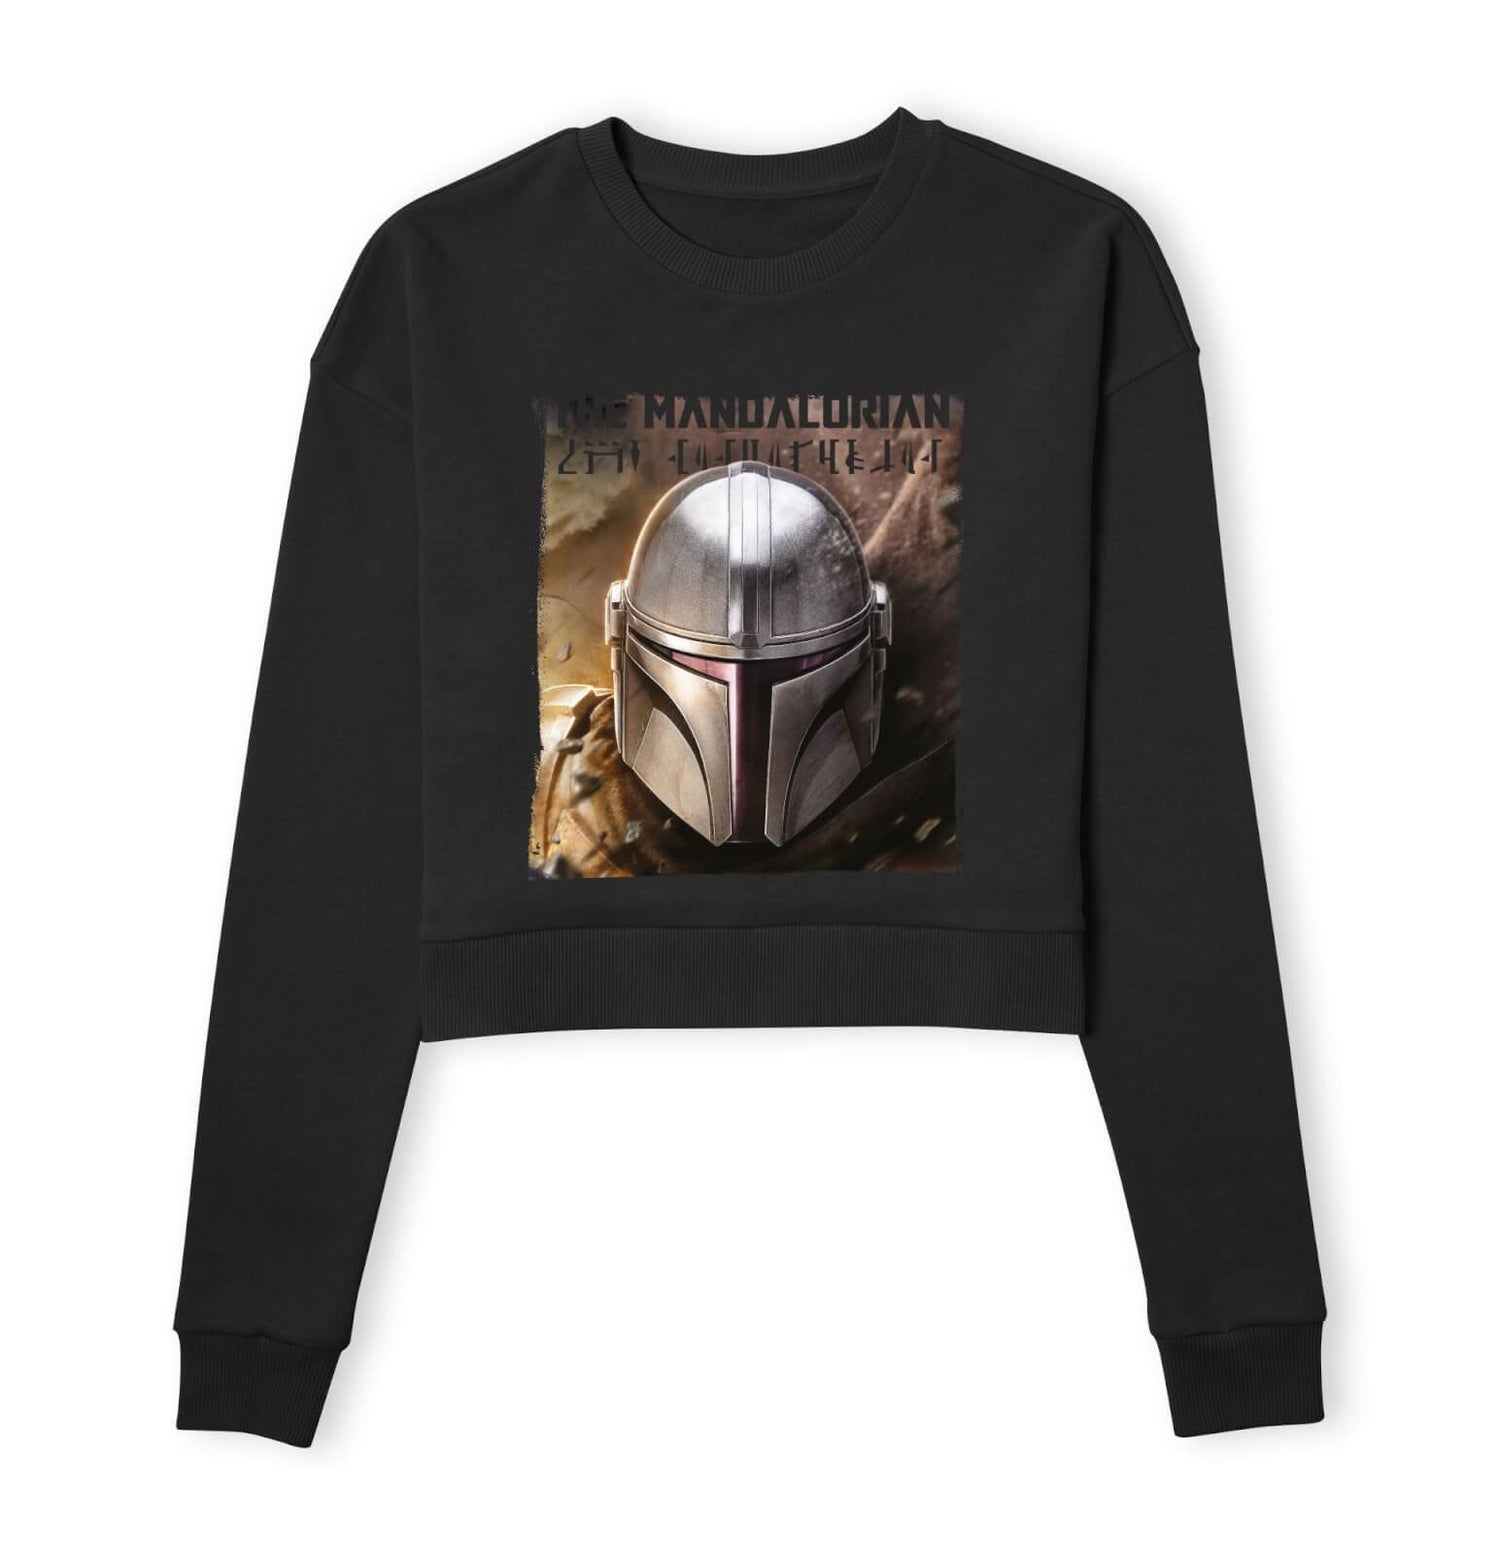 Star Wars The Mandalorian Focus Women's Cropped Sweatshirt - Black